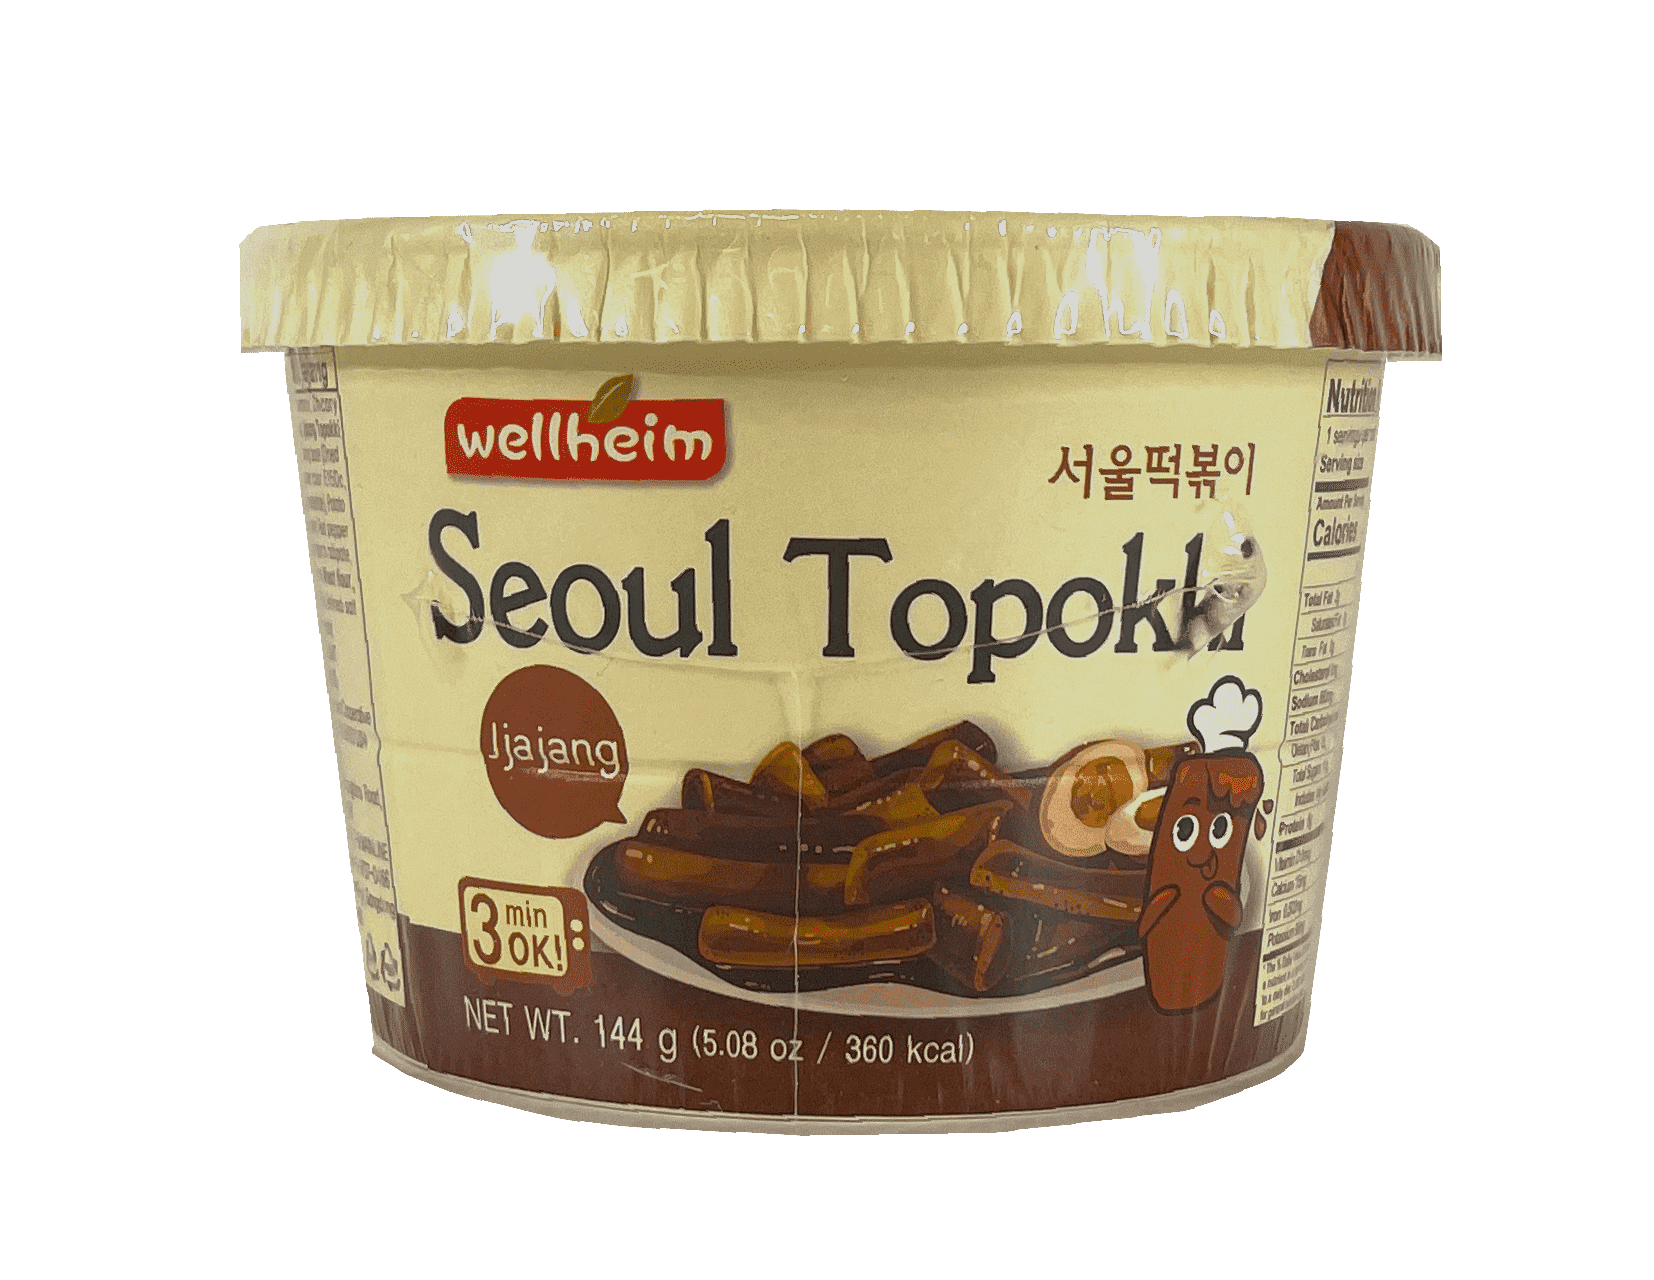 Snabbriskakor Seoul Topokki Jjajang Smak 144g Wellheim Korean